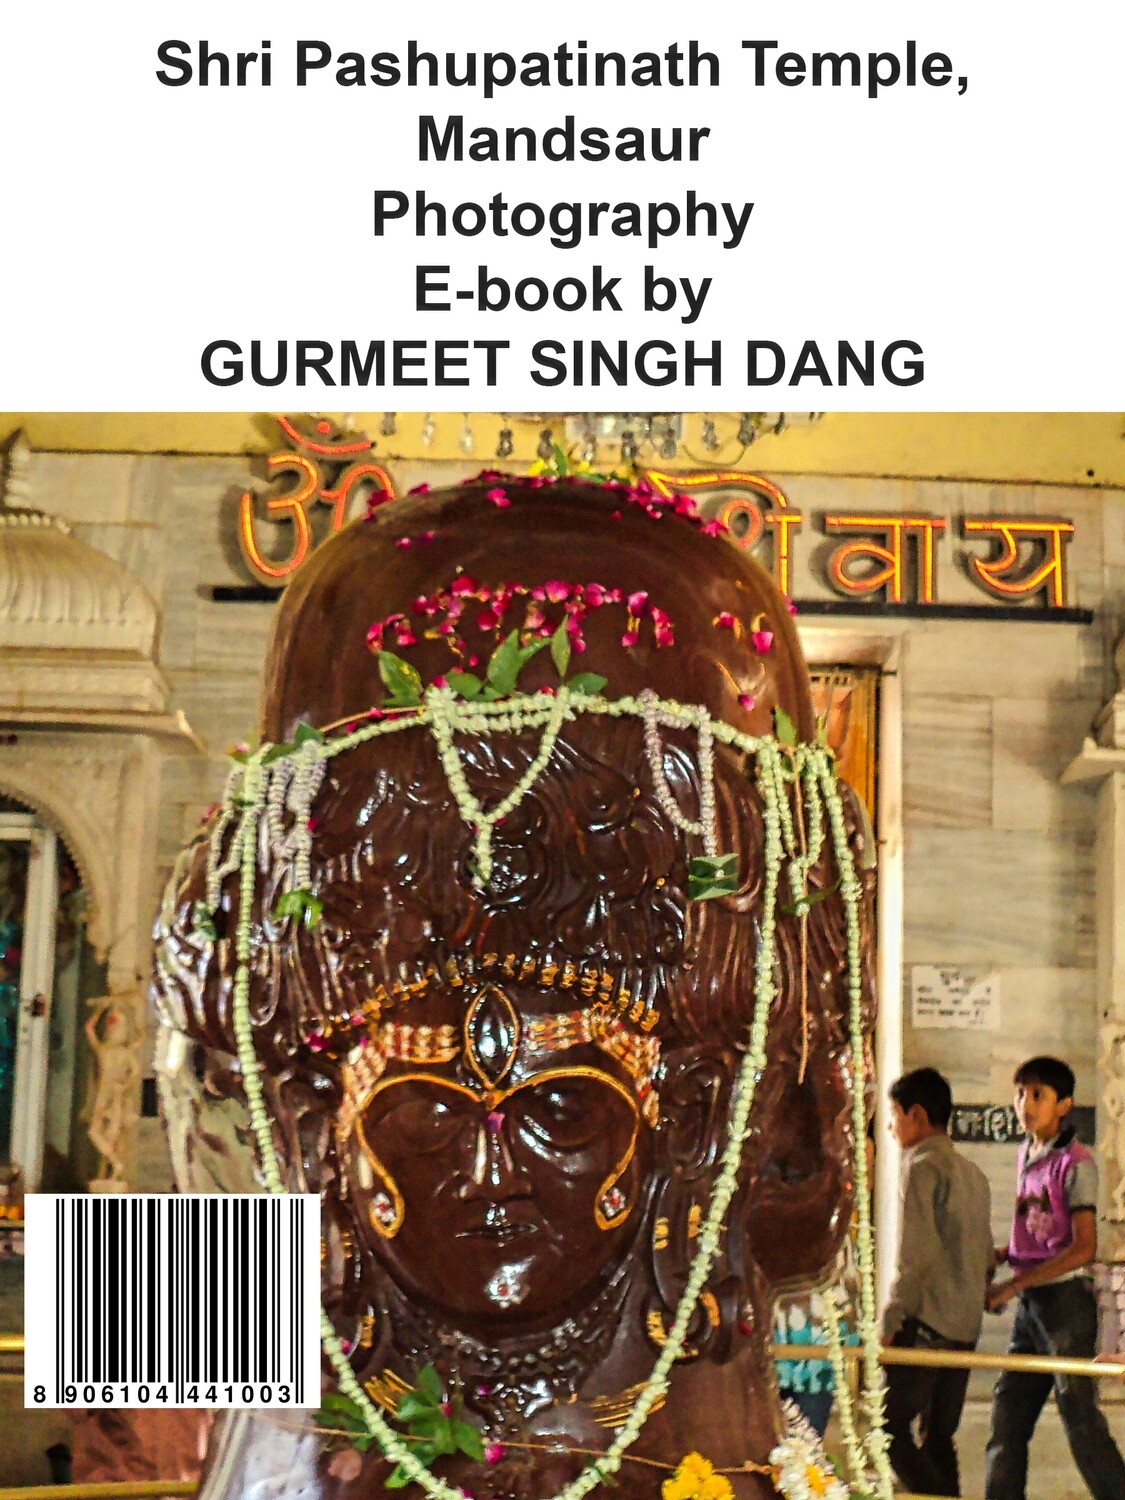 Shri Pashupatinath Temple, Mandsaur Photography E-book by GURMEET SINGH DANG